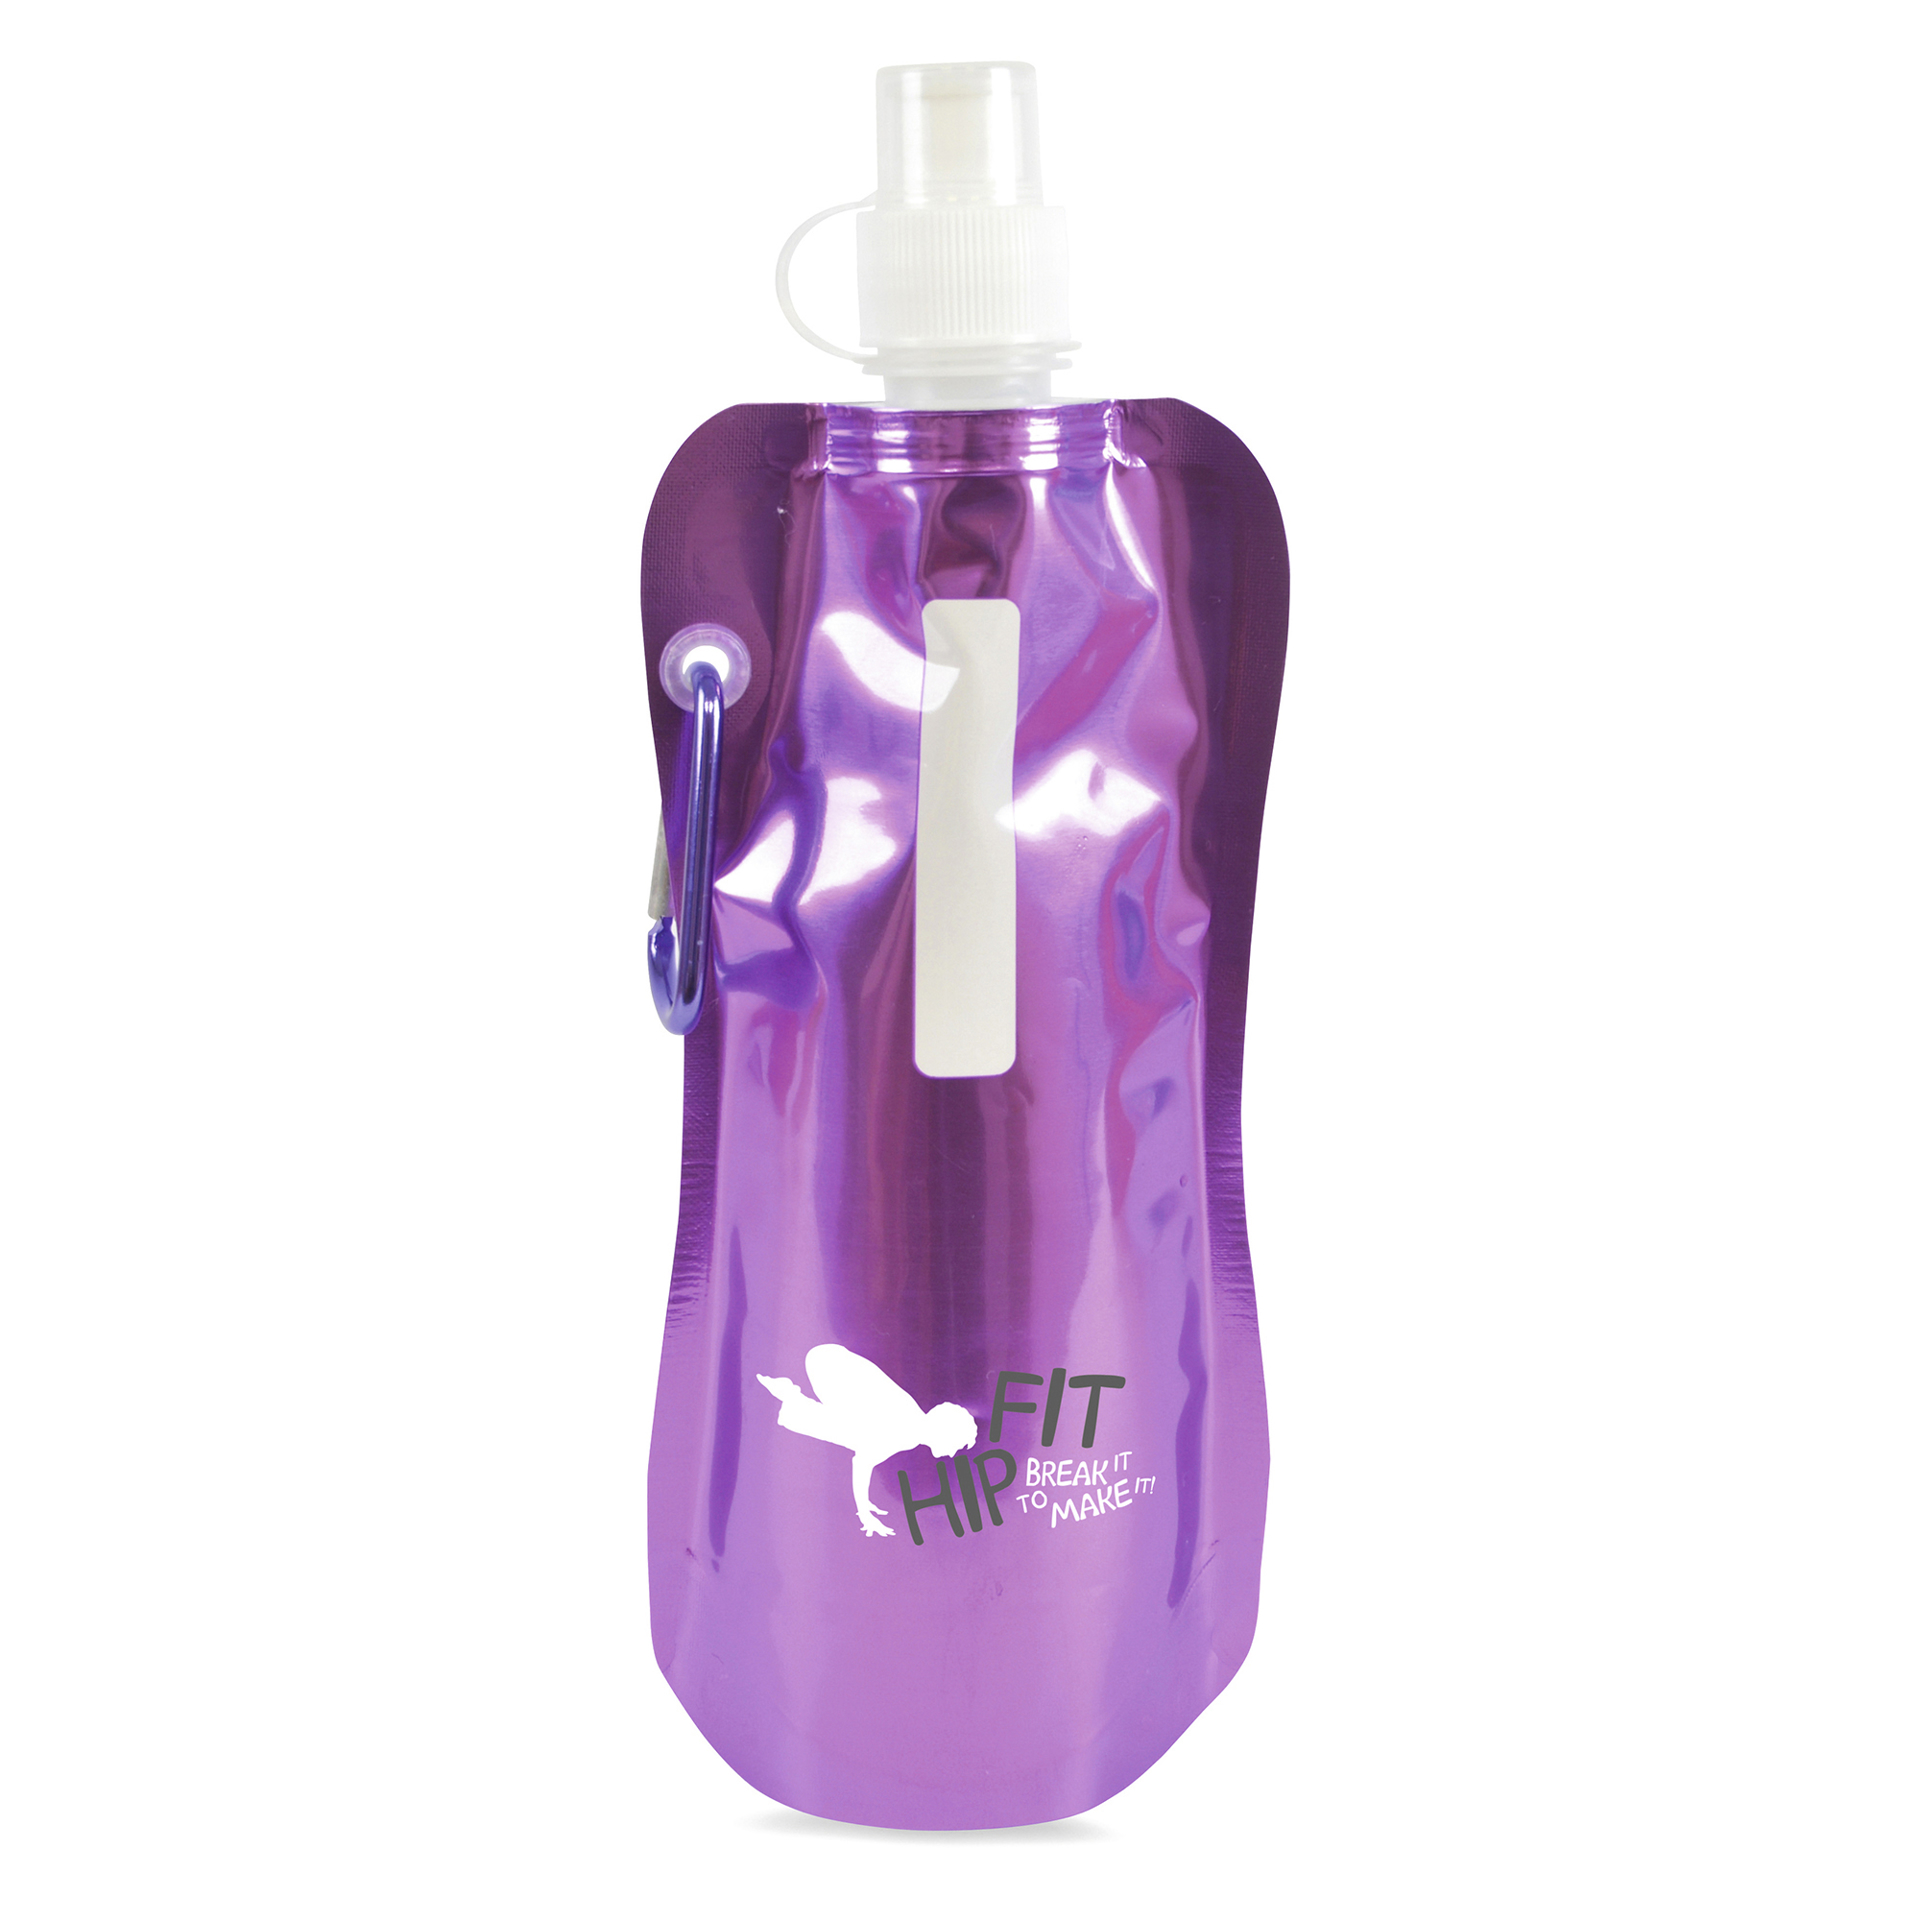 Metallic purple fold up drinking bottle branded with a logo